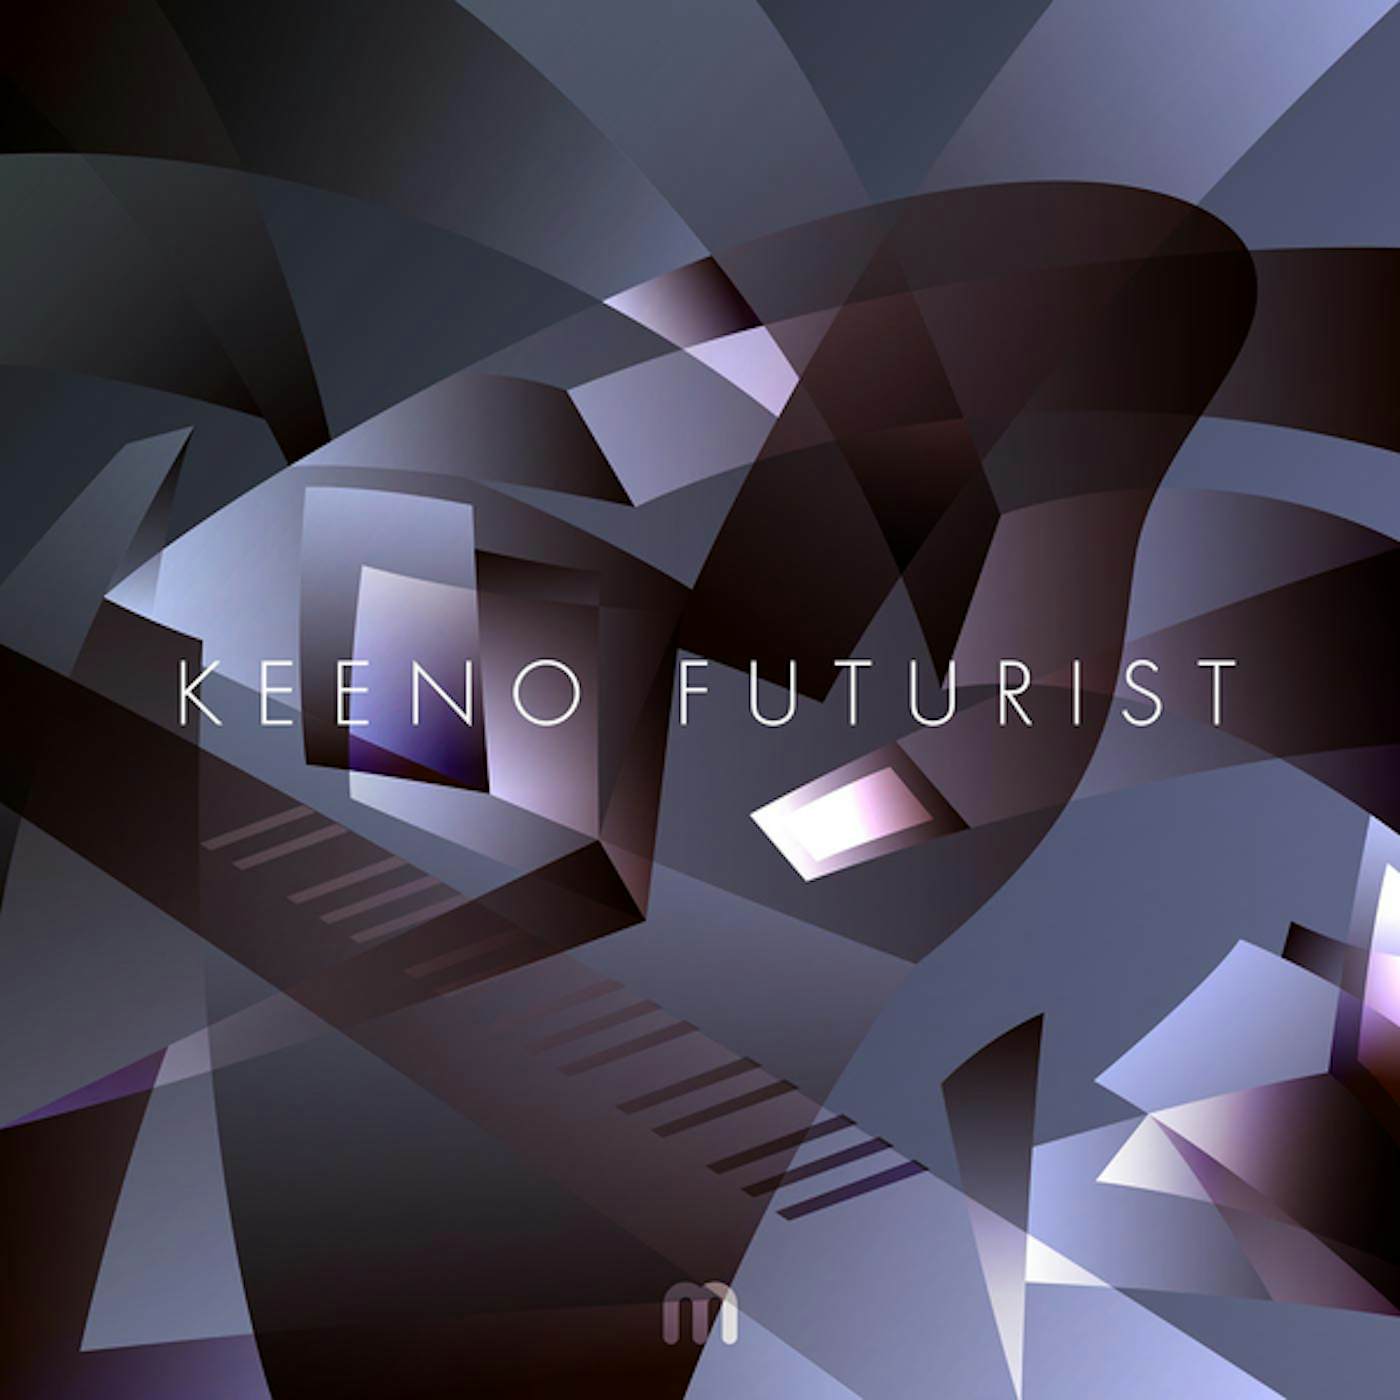 Keeno Futurist